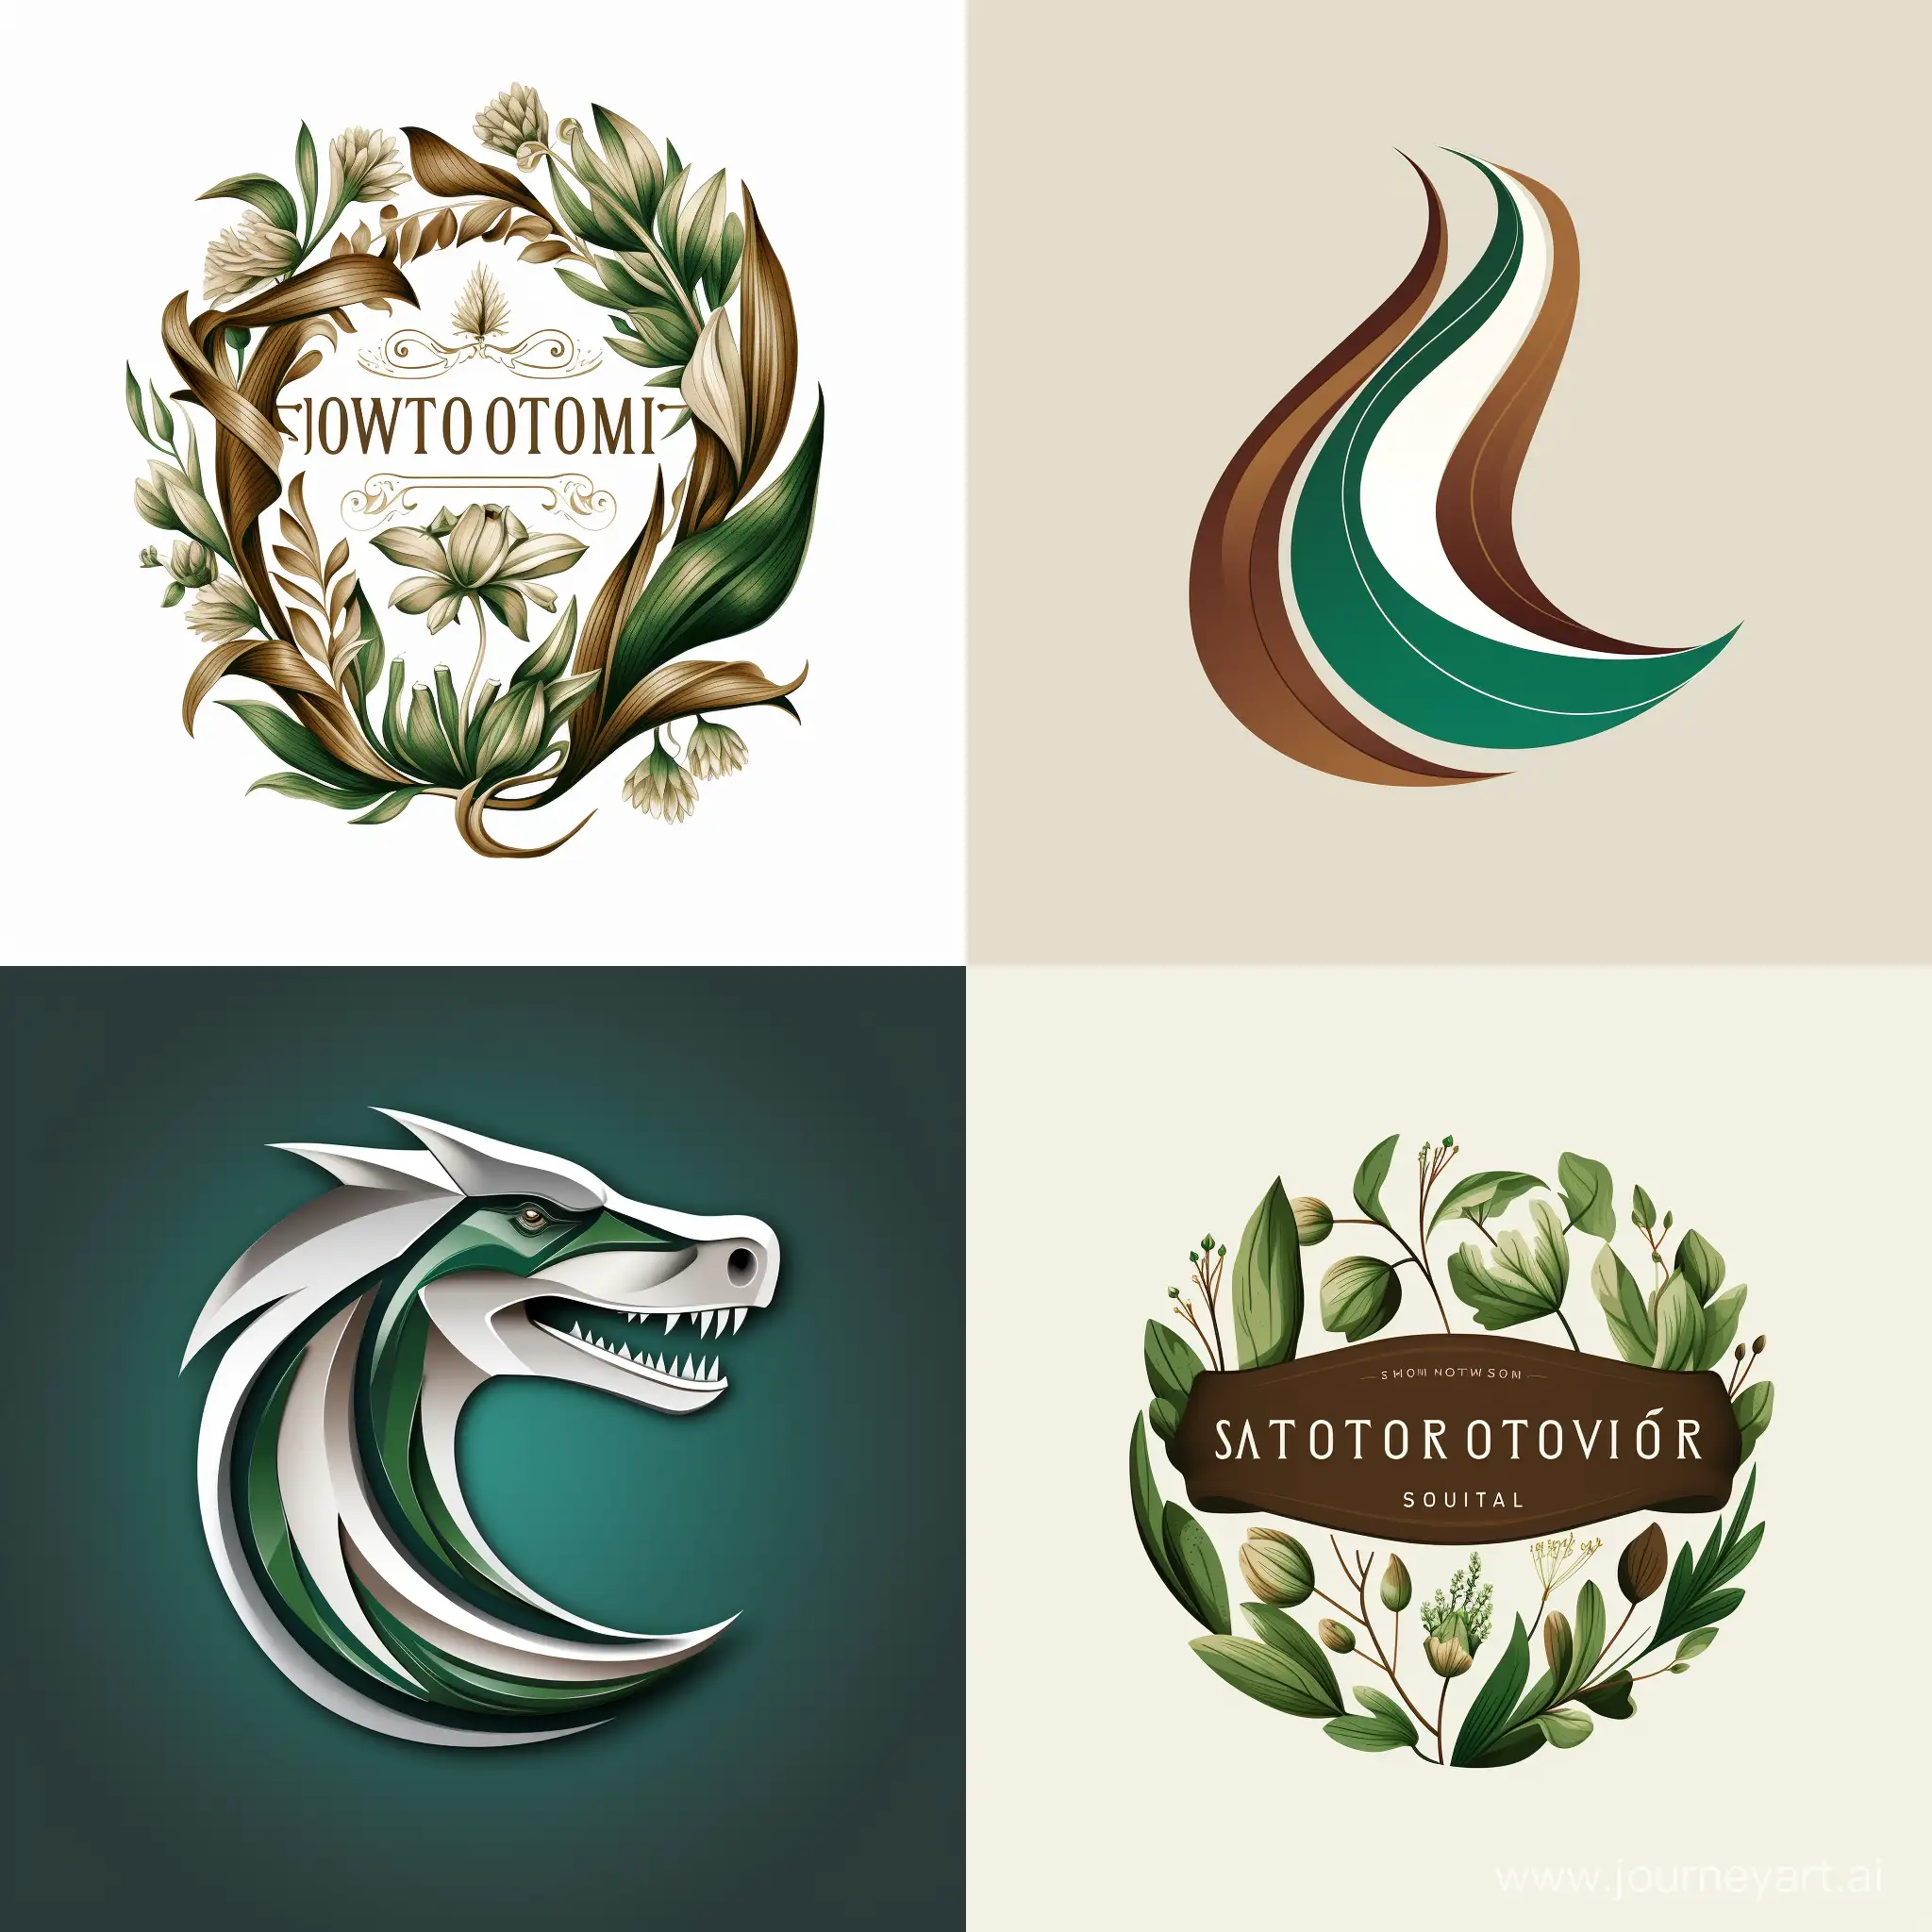 Logo company "Autor Stomatologi" green, braun and white